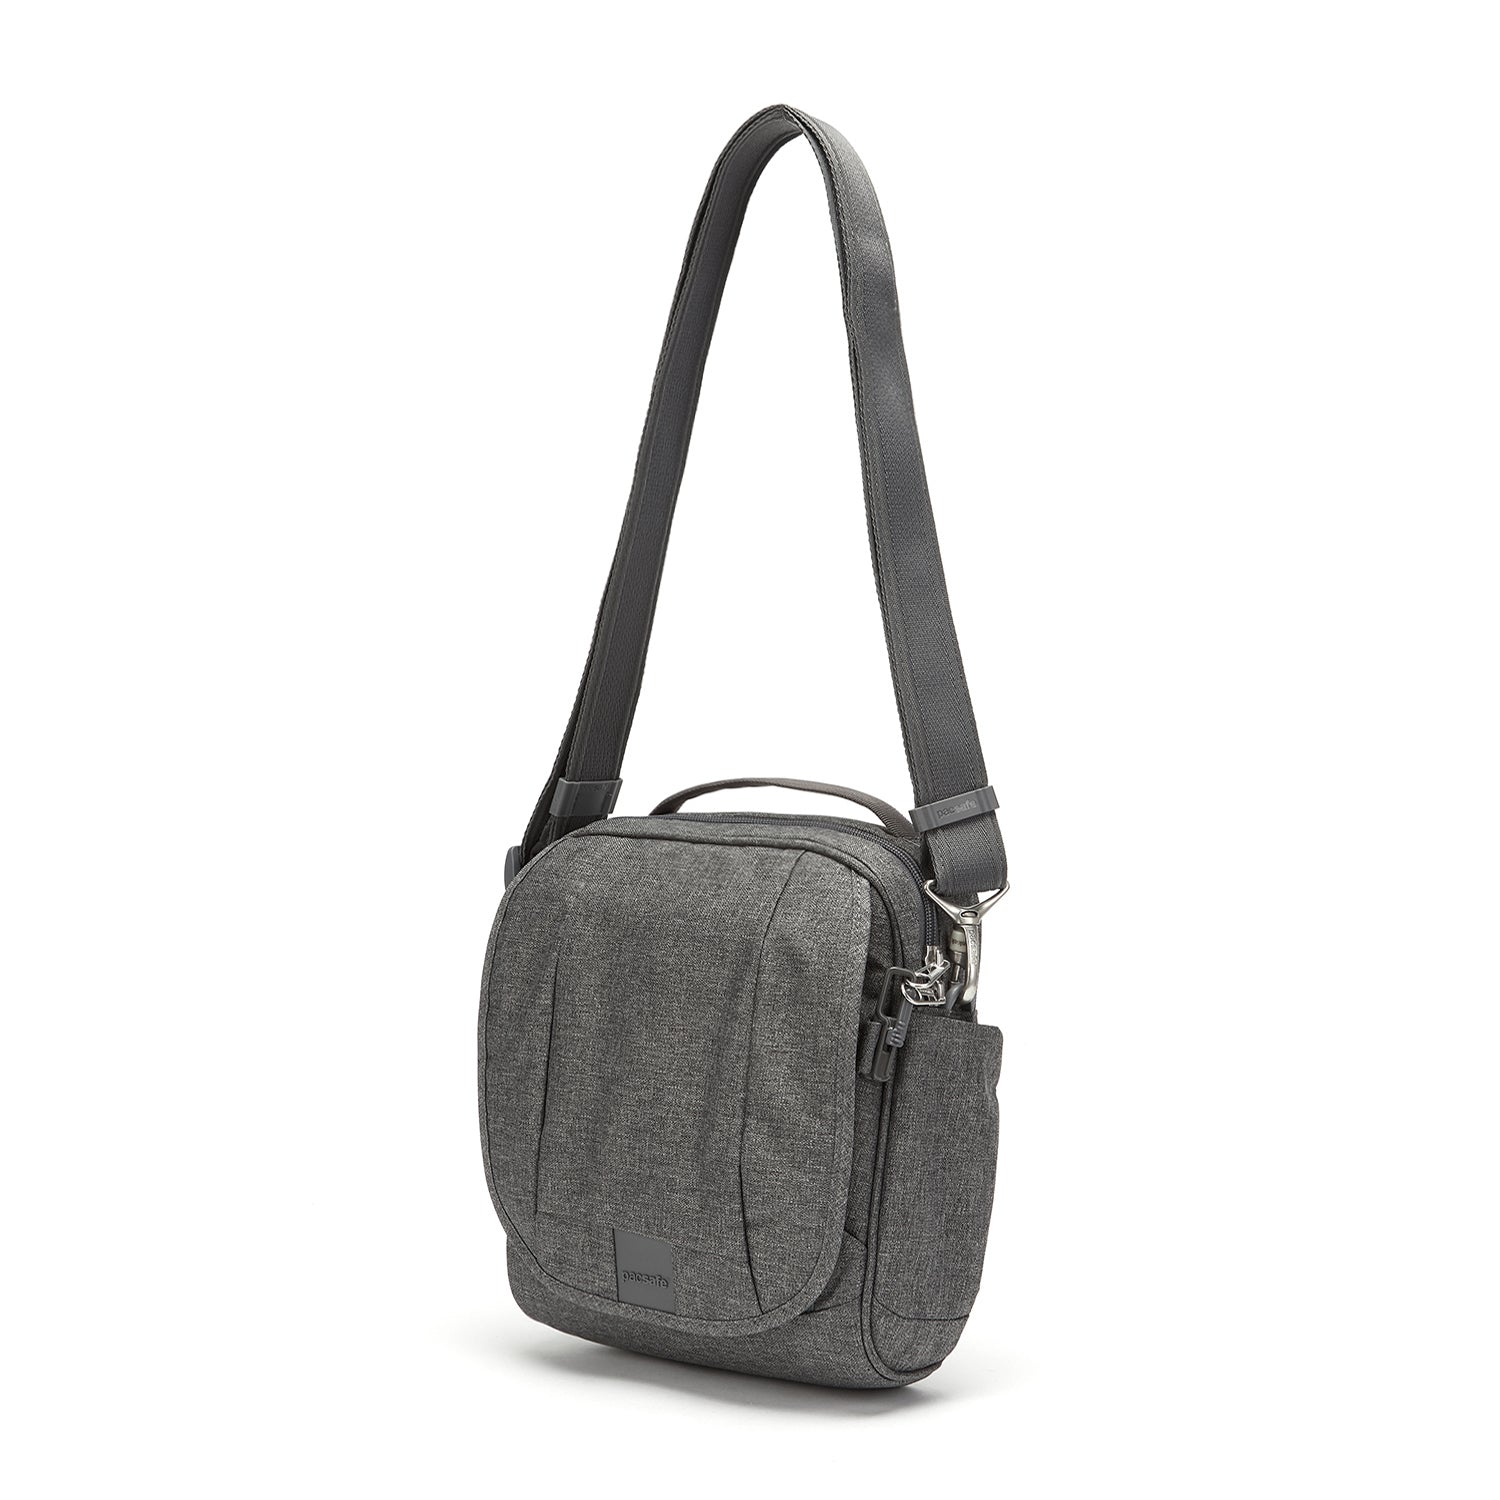 Anti-theft Crossbody Bag | Metrosafe LS200 in Black by Pacsafe